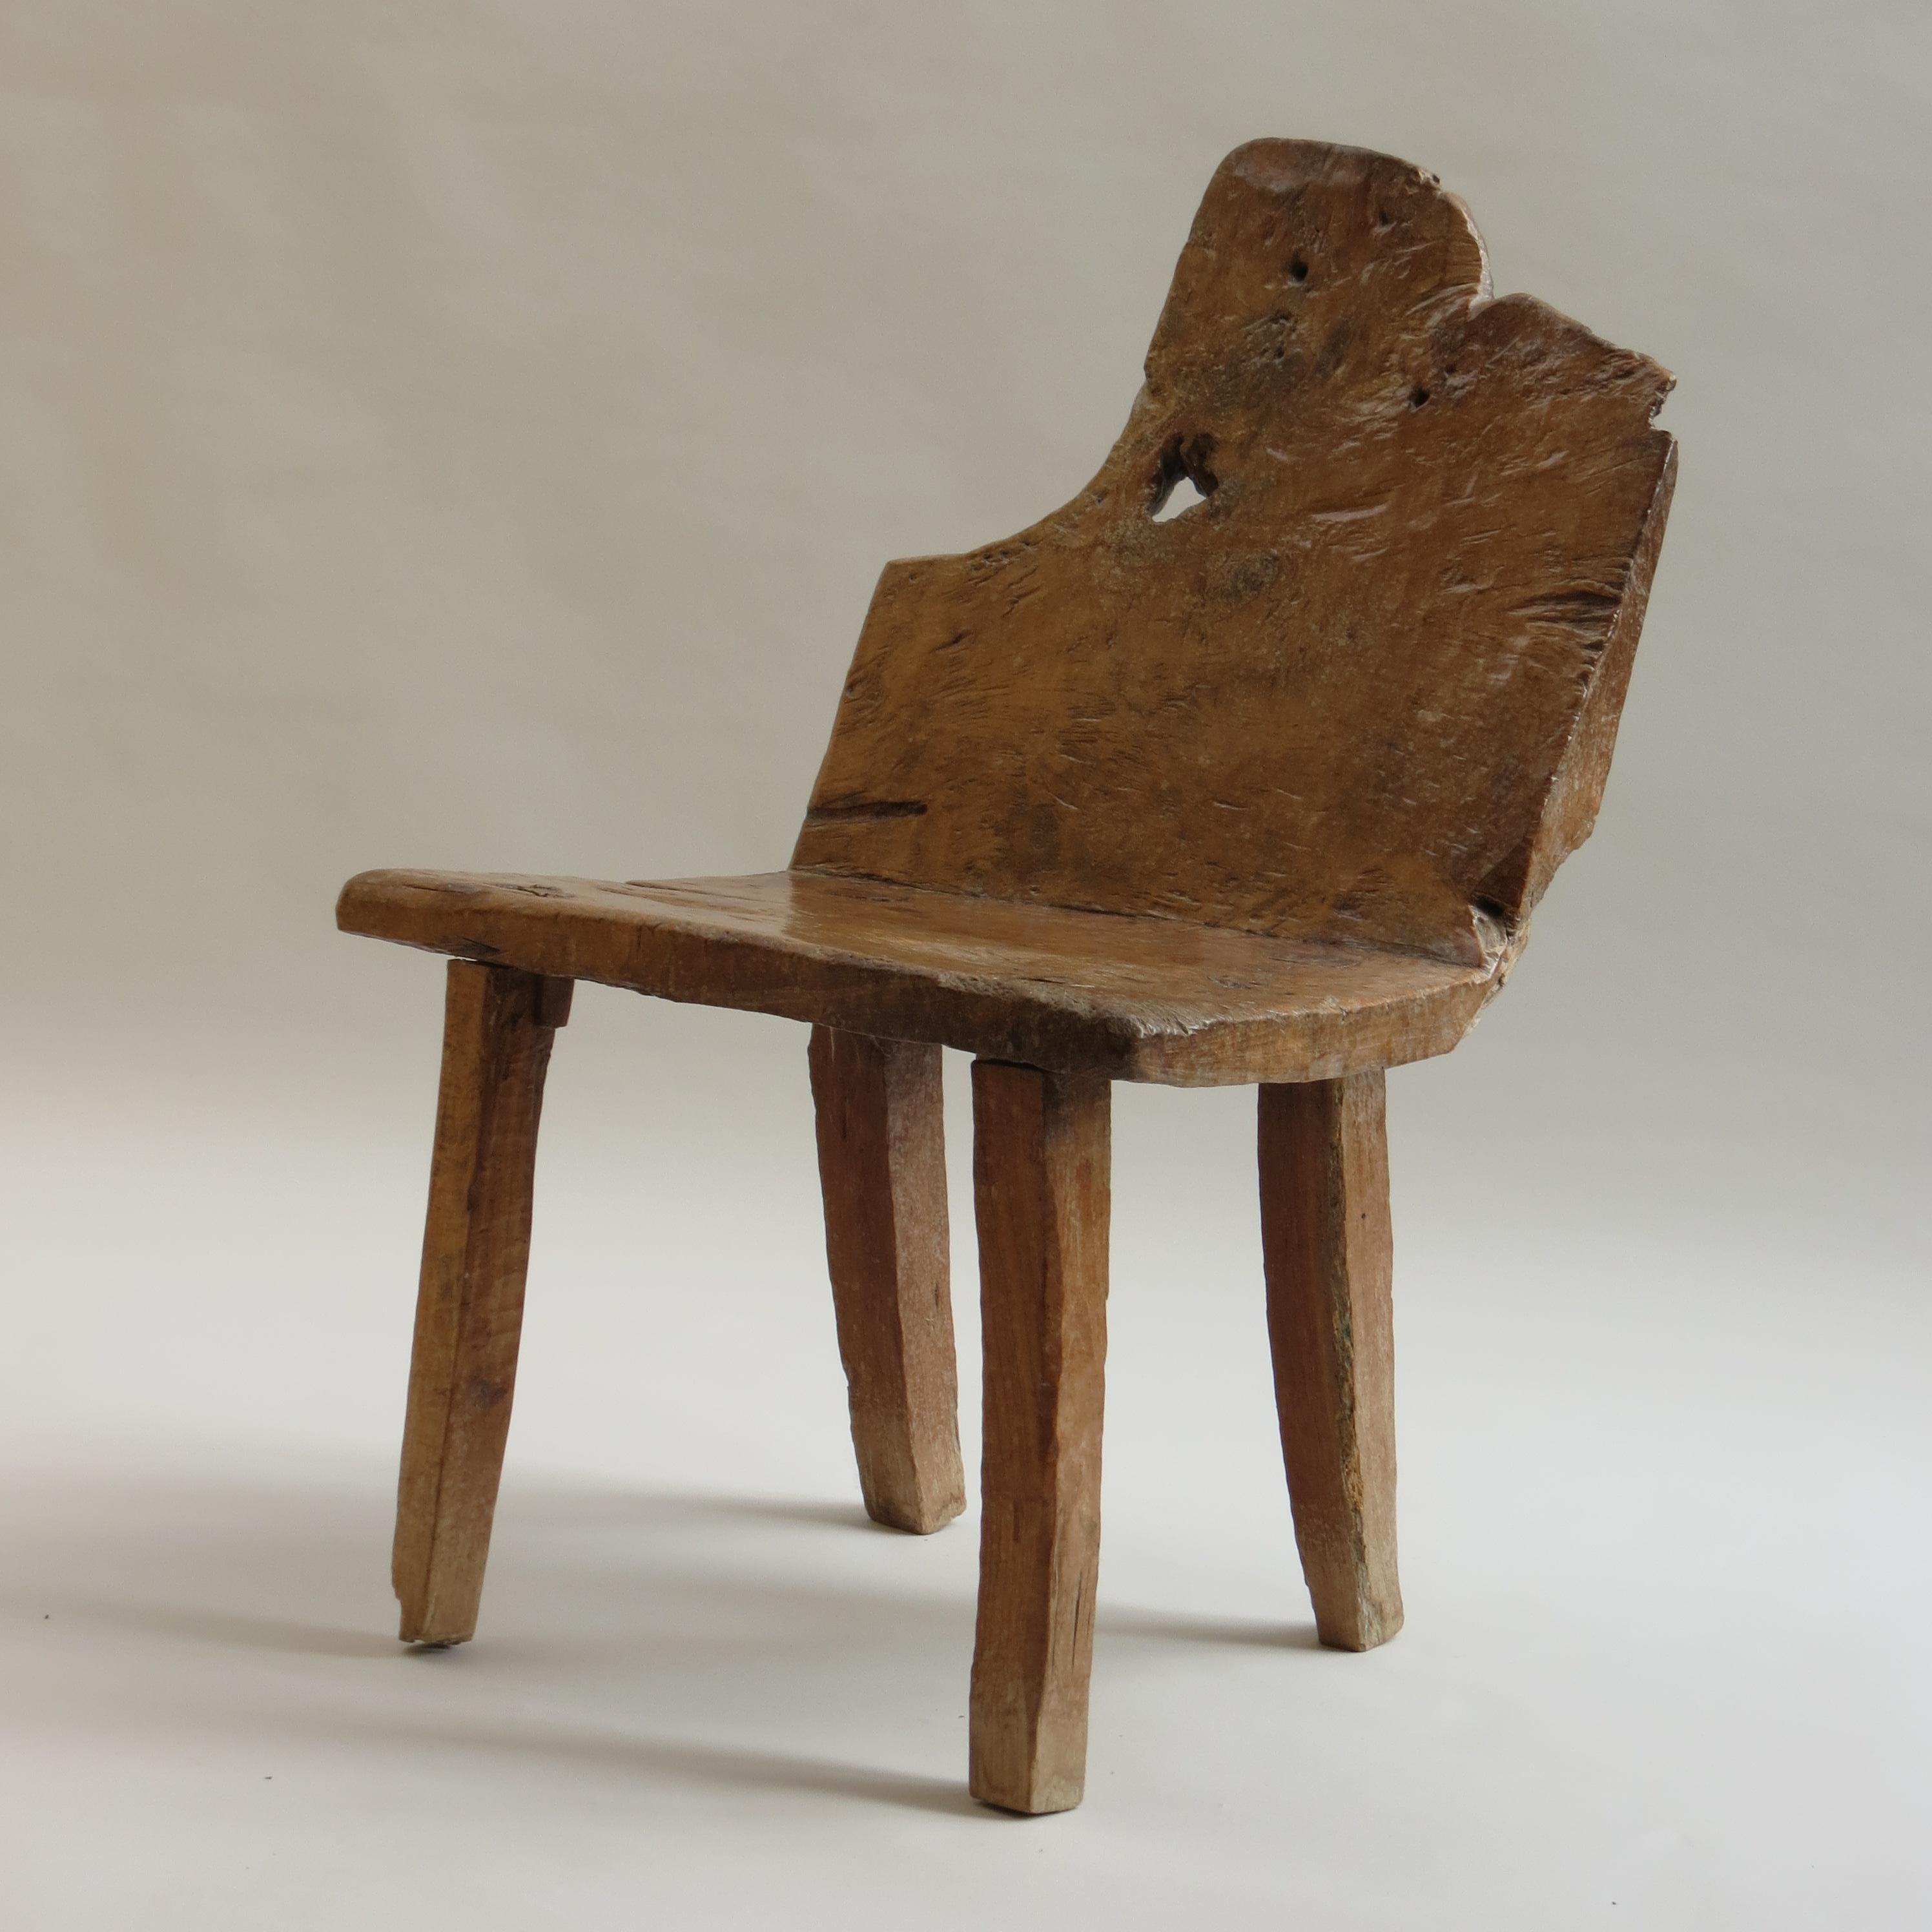 Hand-Crafted Rare Primitive Walnut Chair 19th Century English Wabi Sabi style For Sale